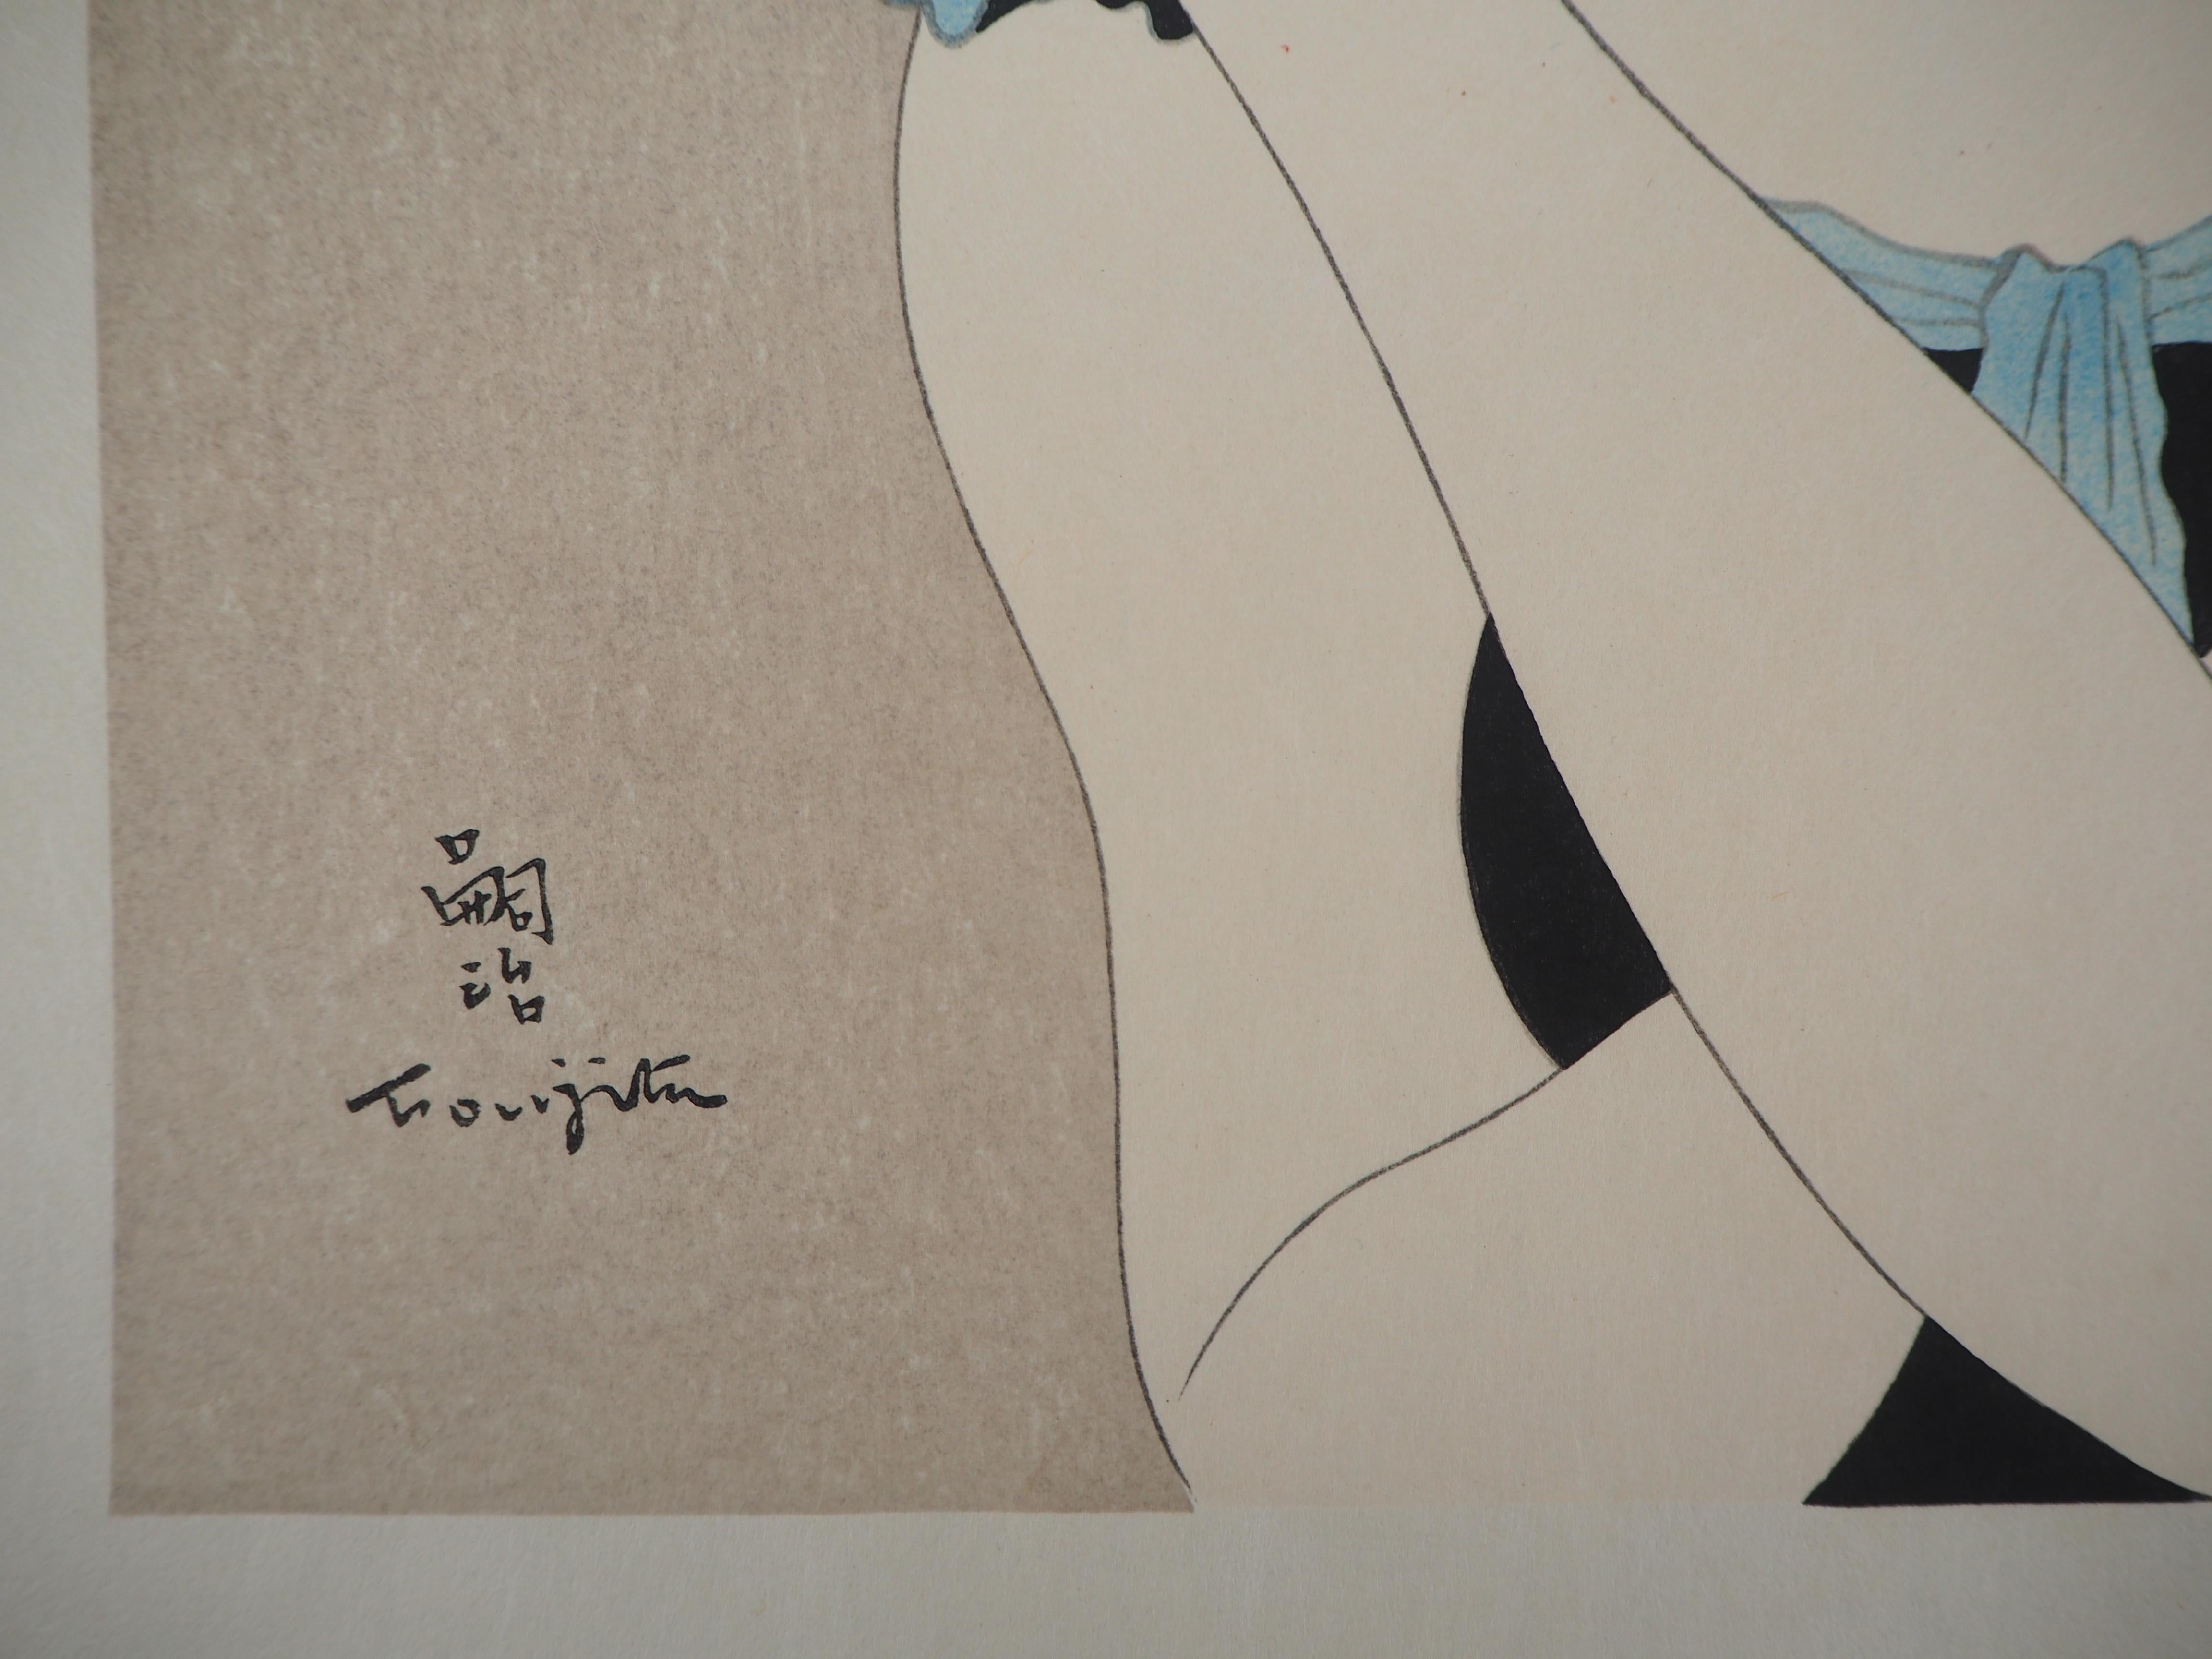 Blond Hair Woman - Original woodcut print (Buisson #35.08) - Print by Leonard Tsuguharu Foujita